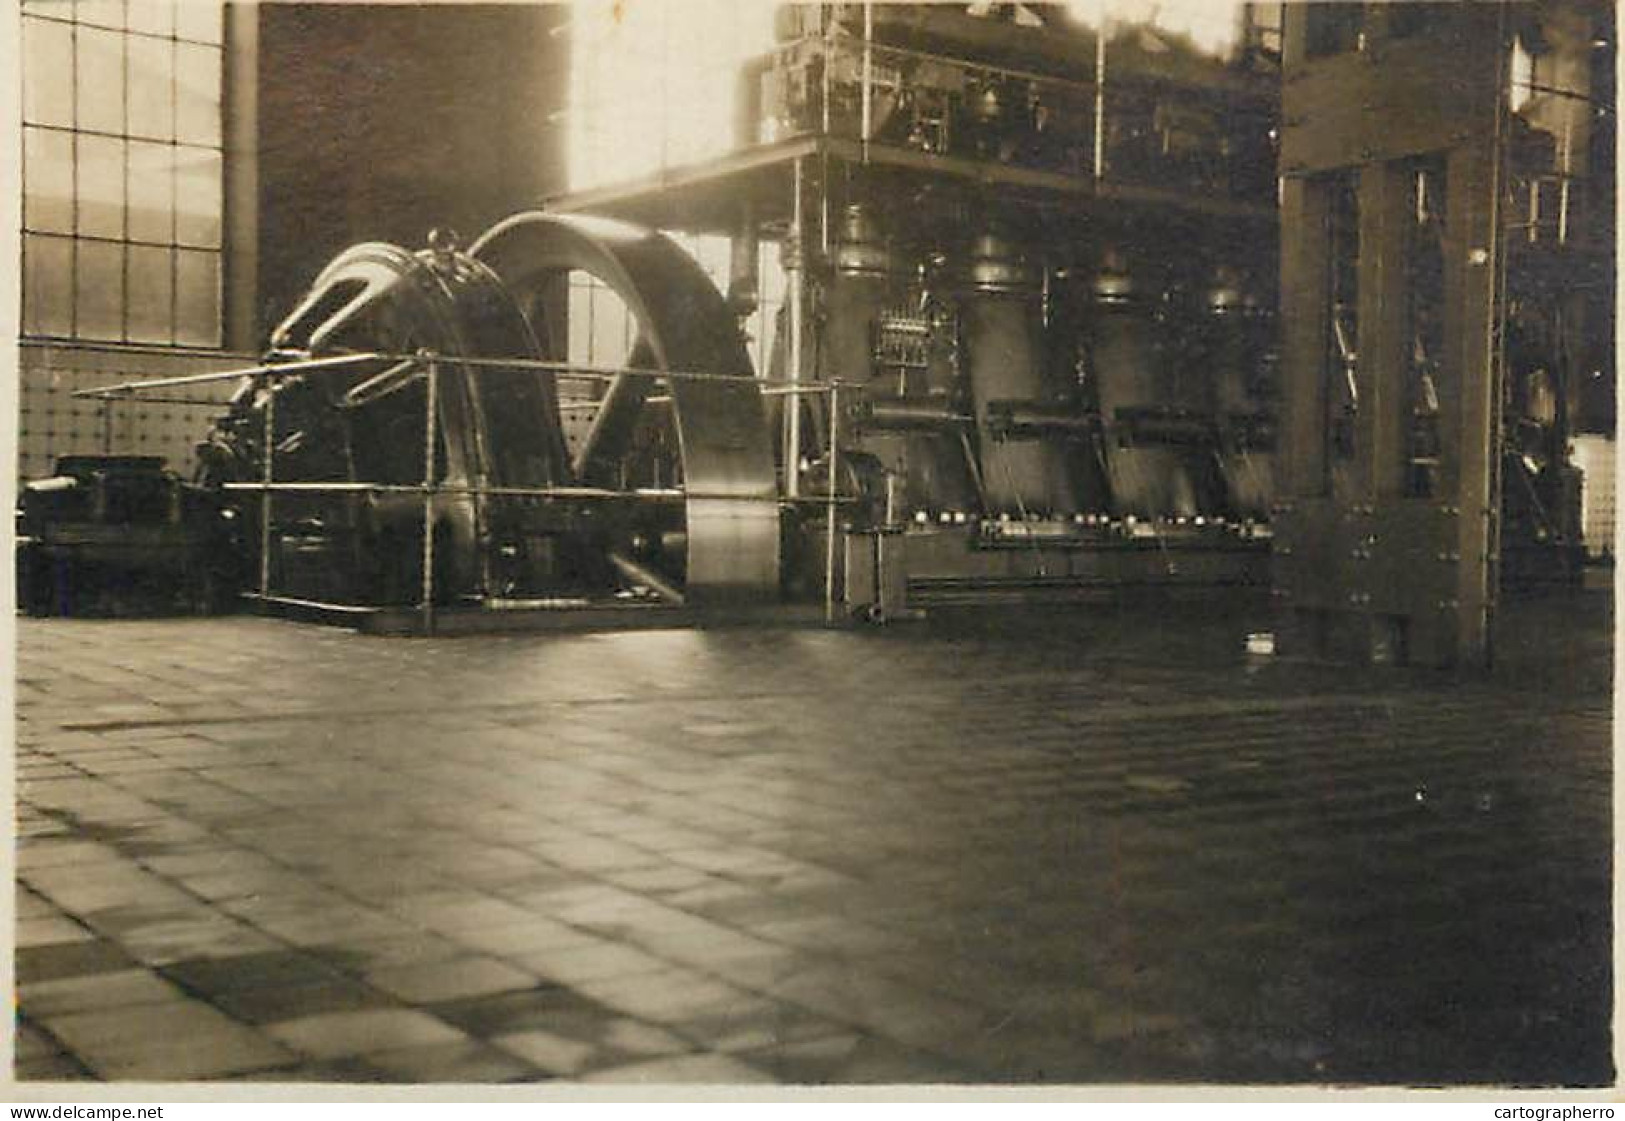 Electric Power Plant Interior Targu Mures Romania Photo 1930s - Objets